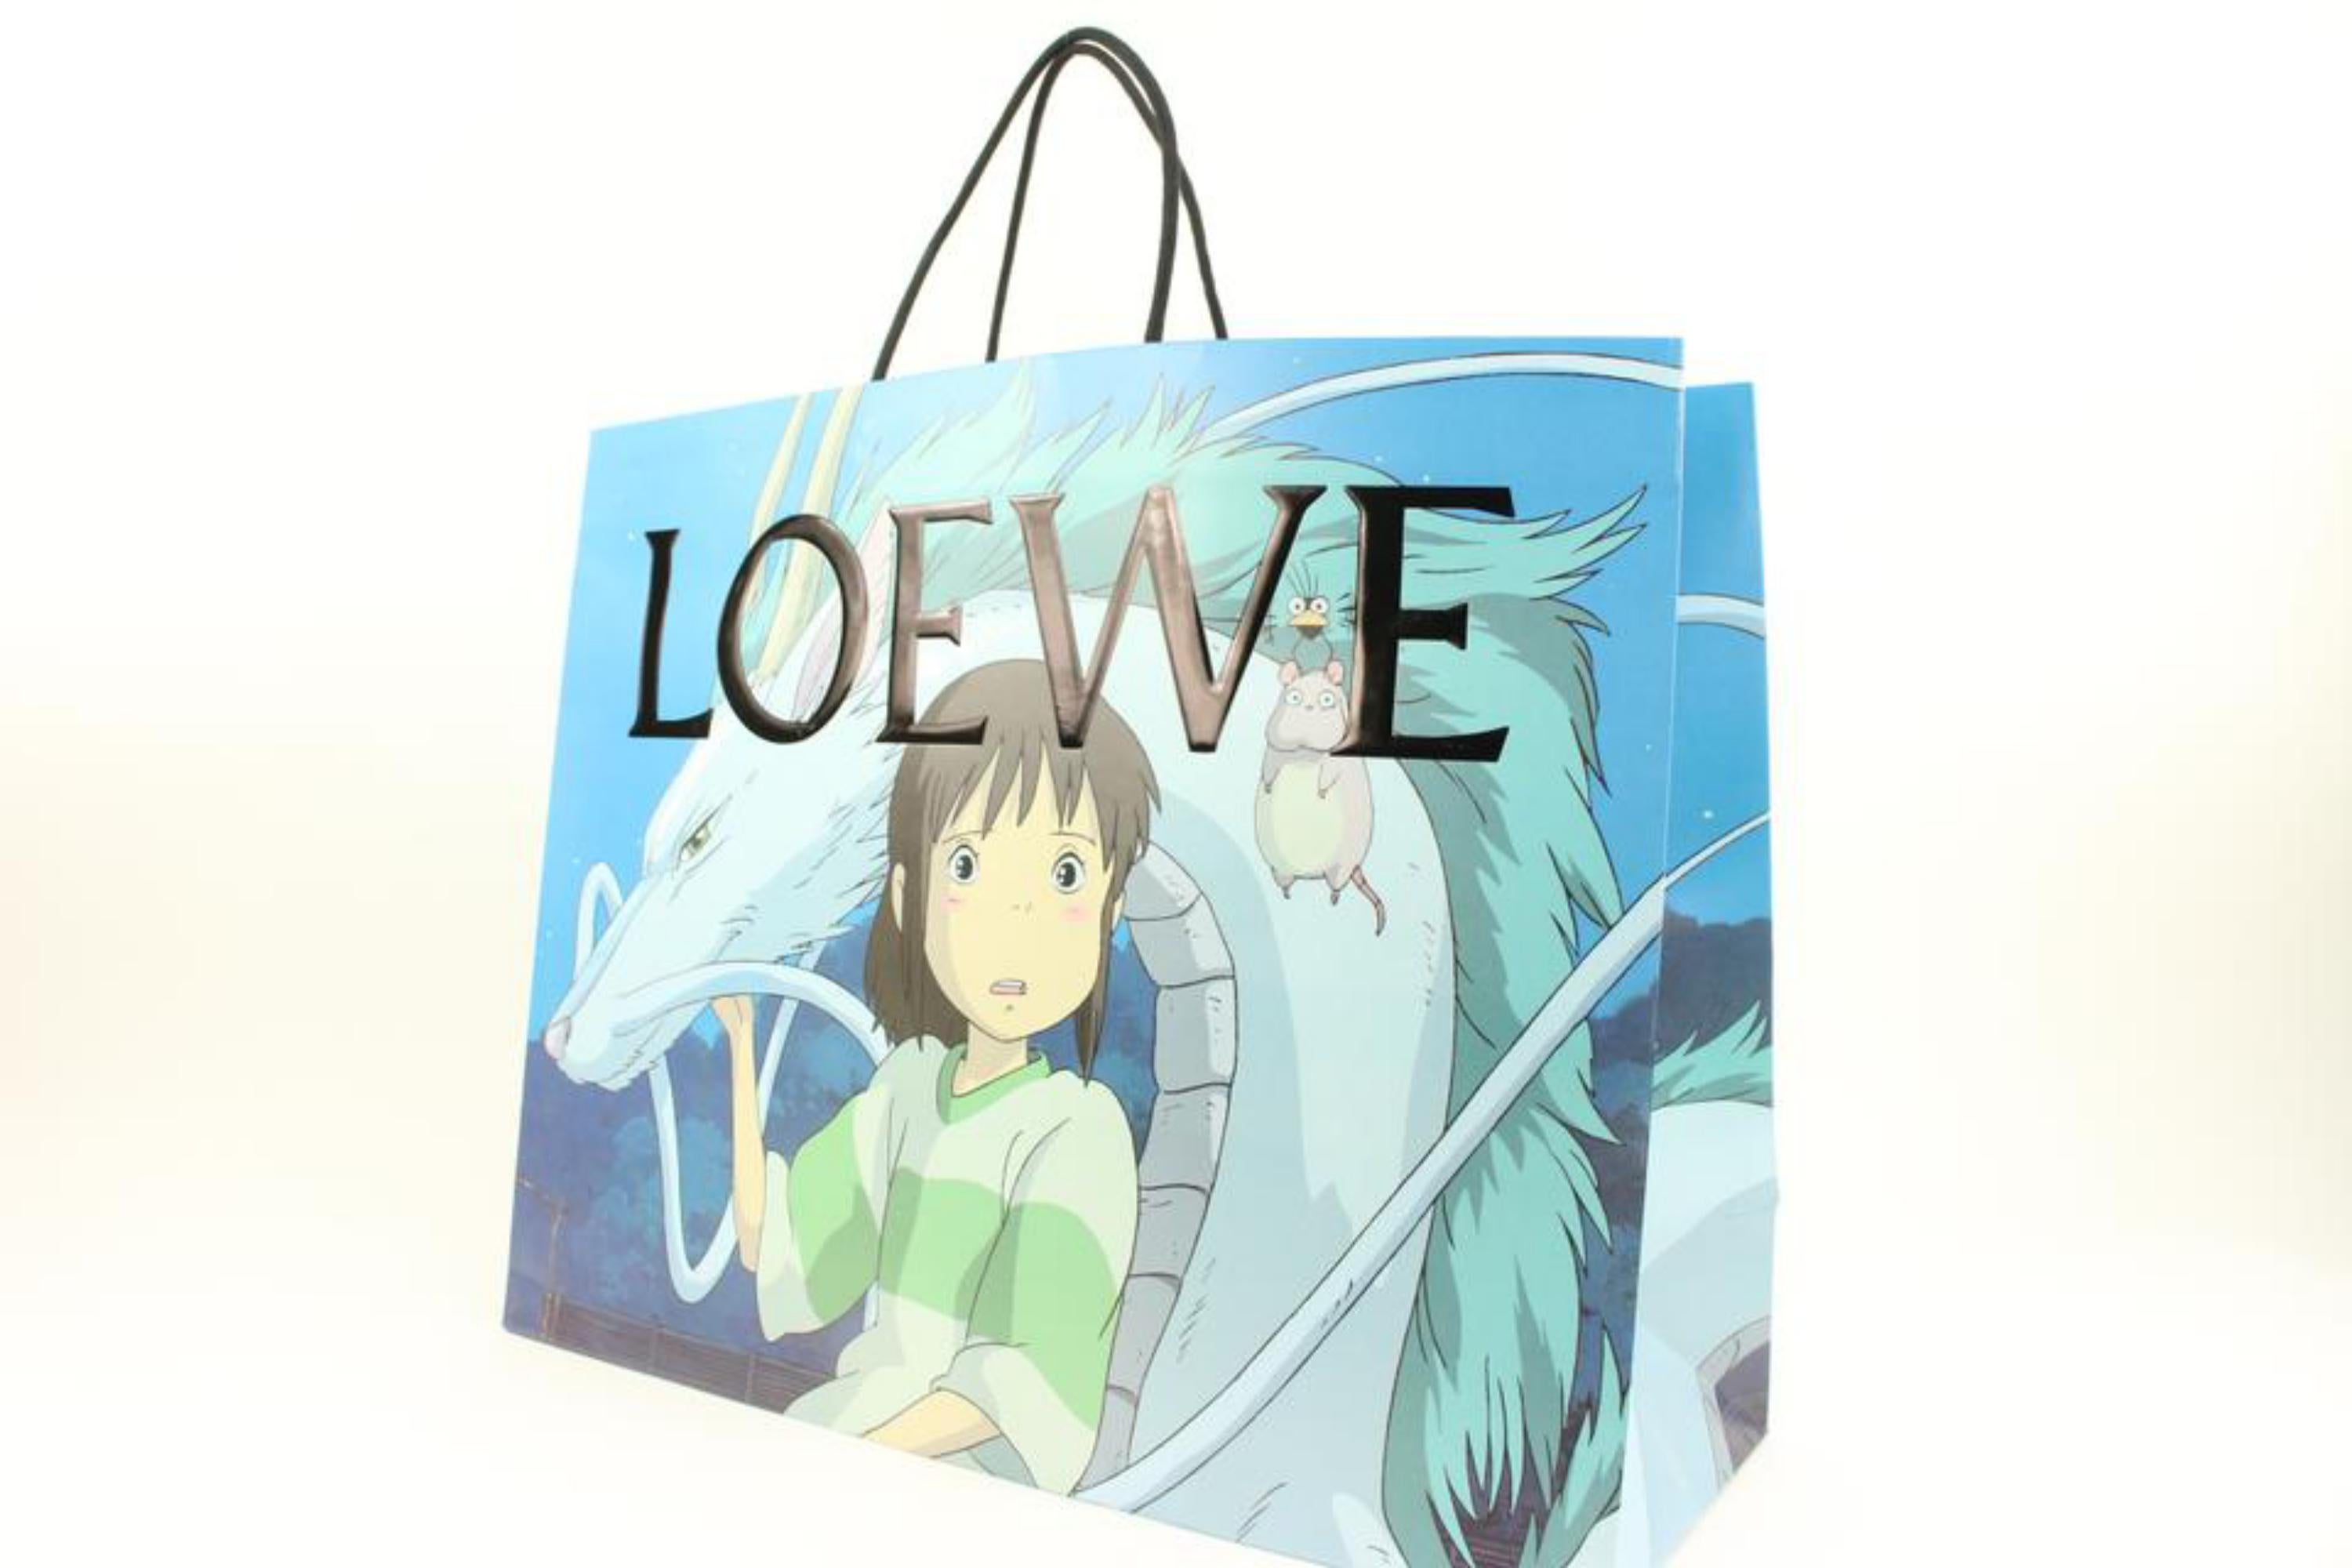 Loewe Studio Ghibli Spirited Away Shopping Tote Bag 48lo37s
Made In: Indonesia
Measurements: Length:  20